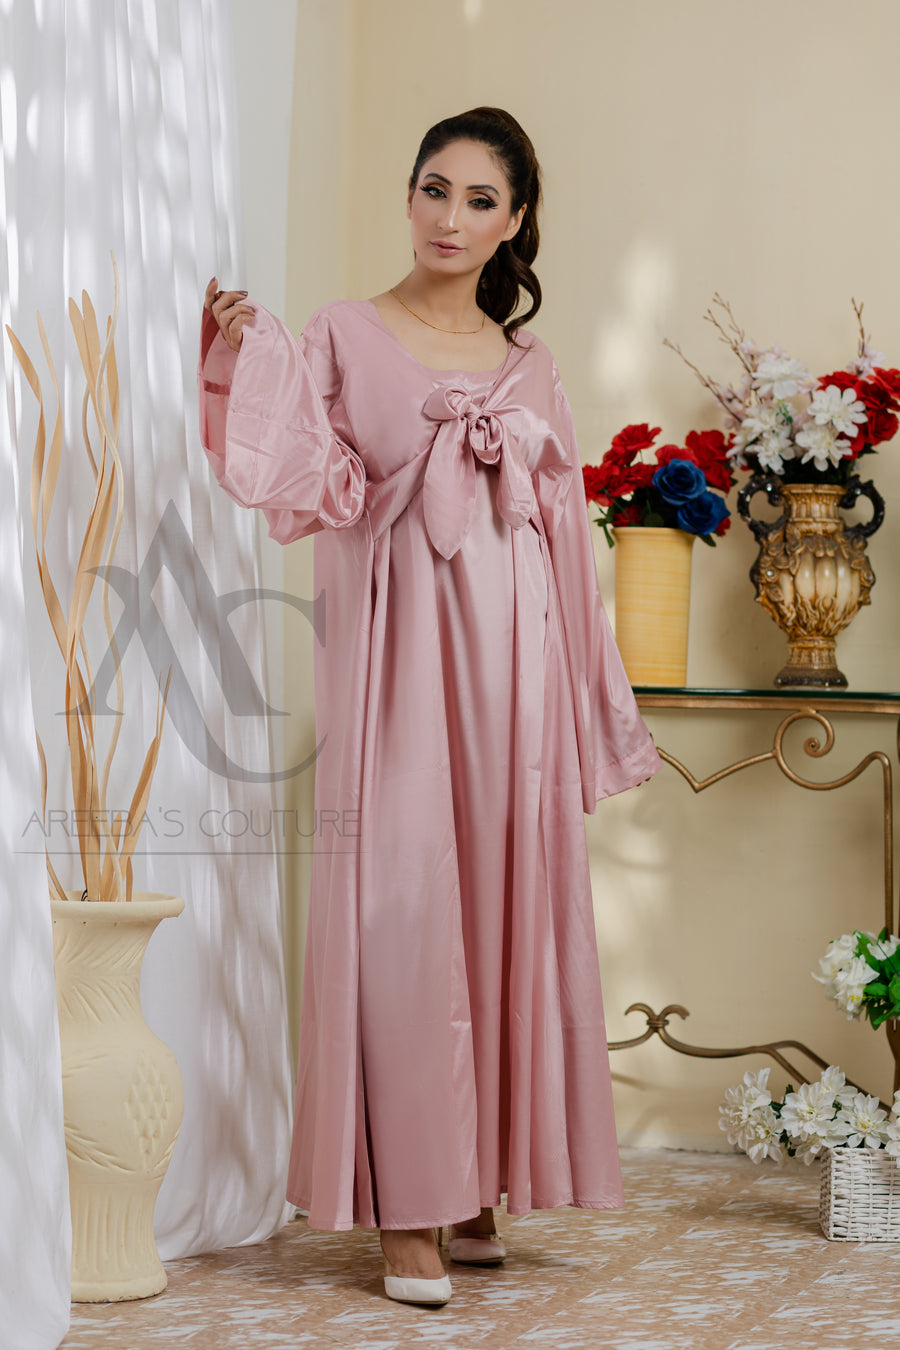 Blossom Ziya abaya- Areeba's Couture